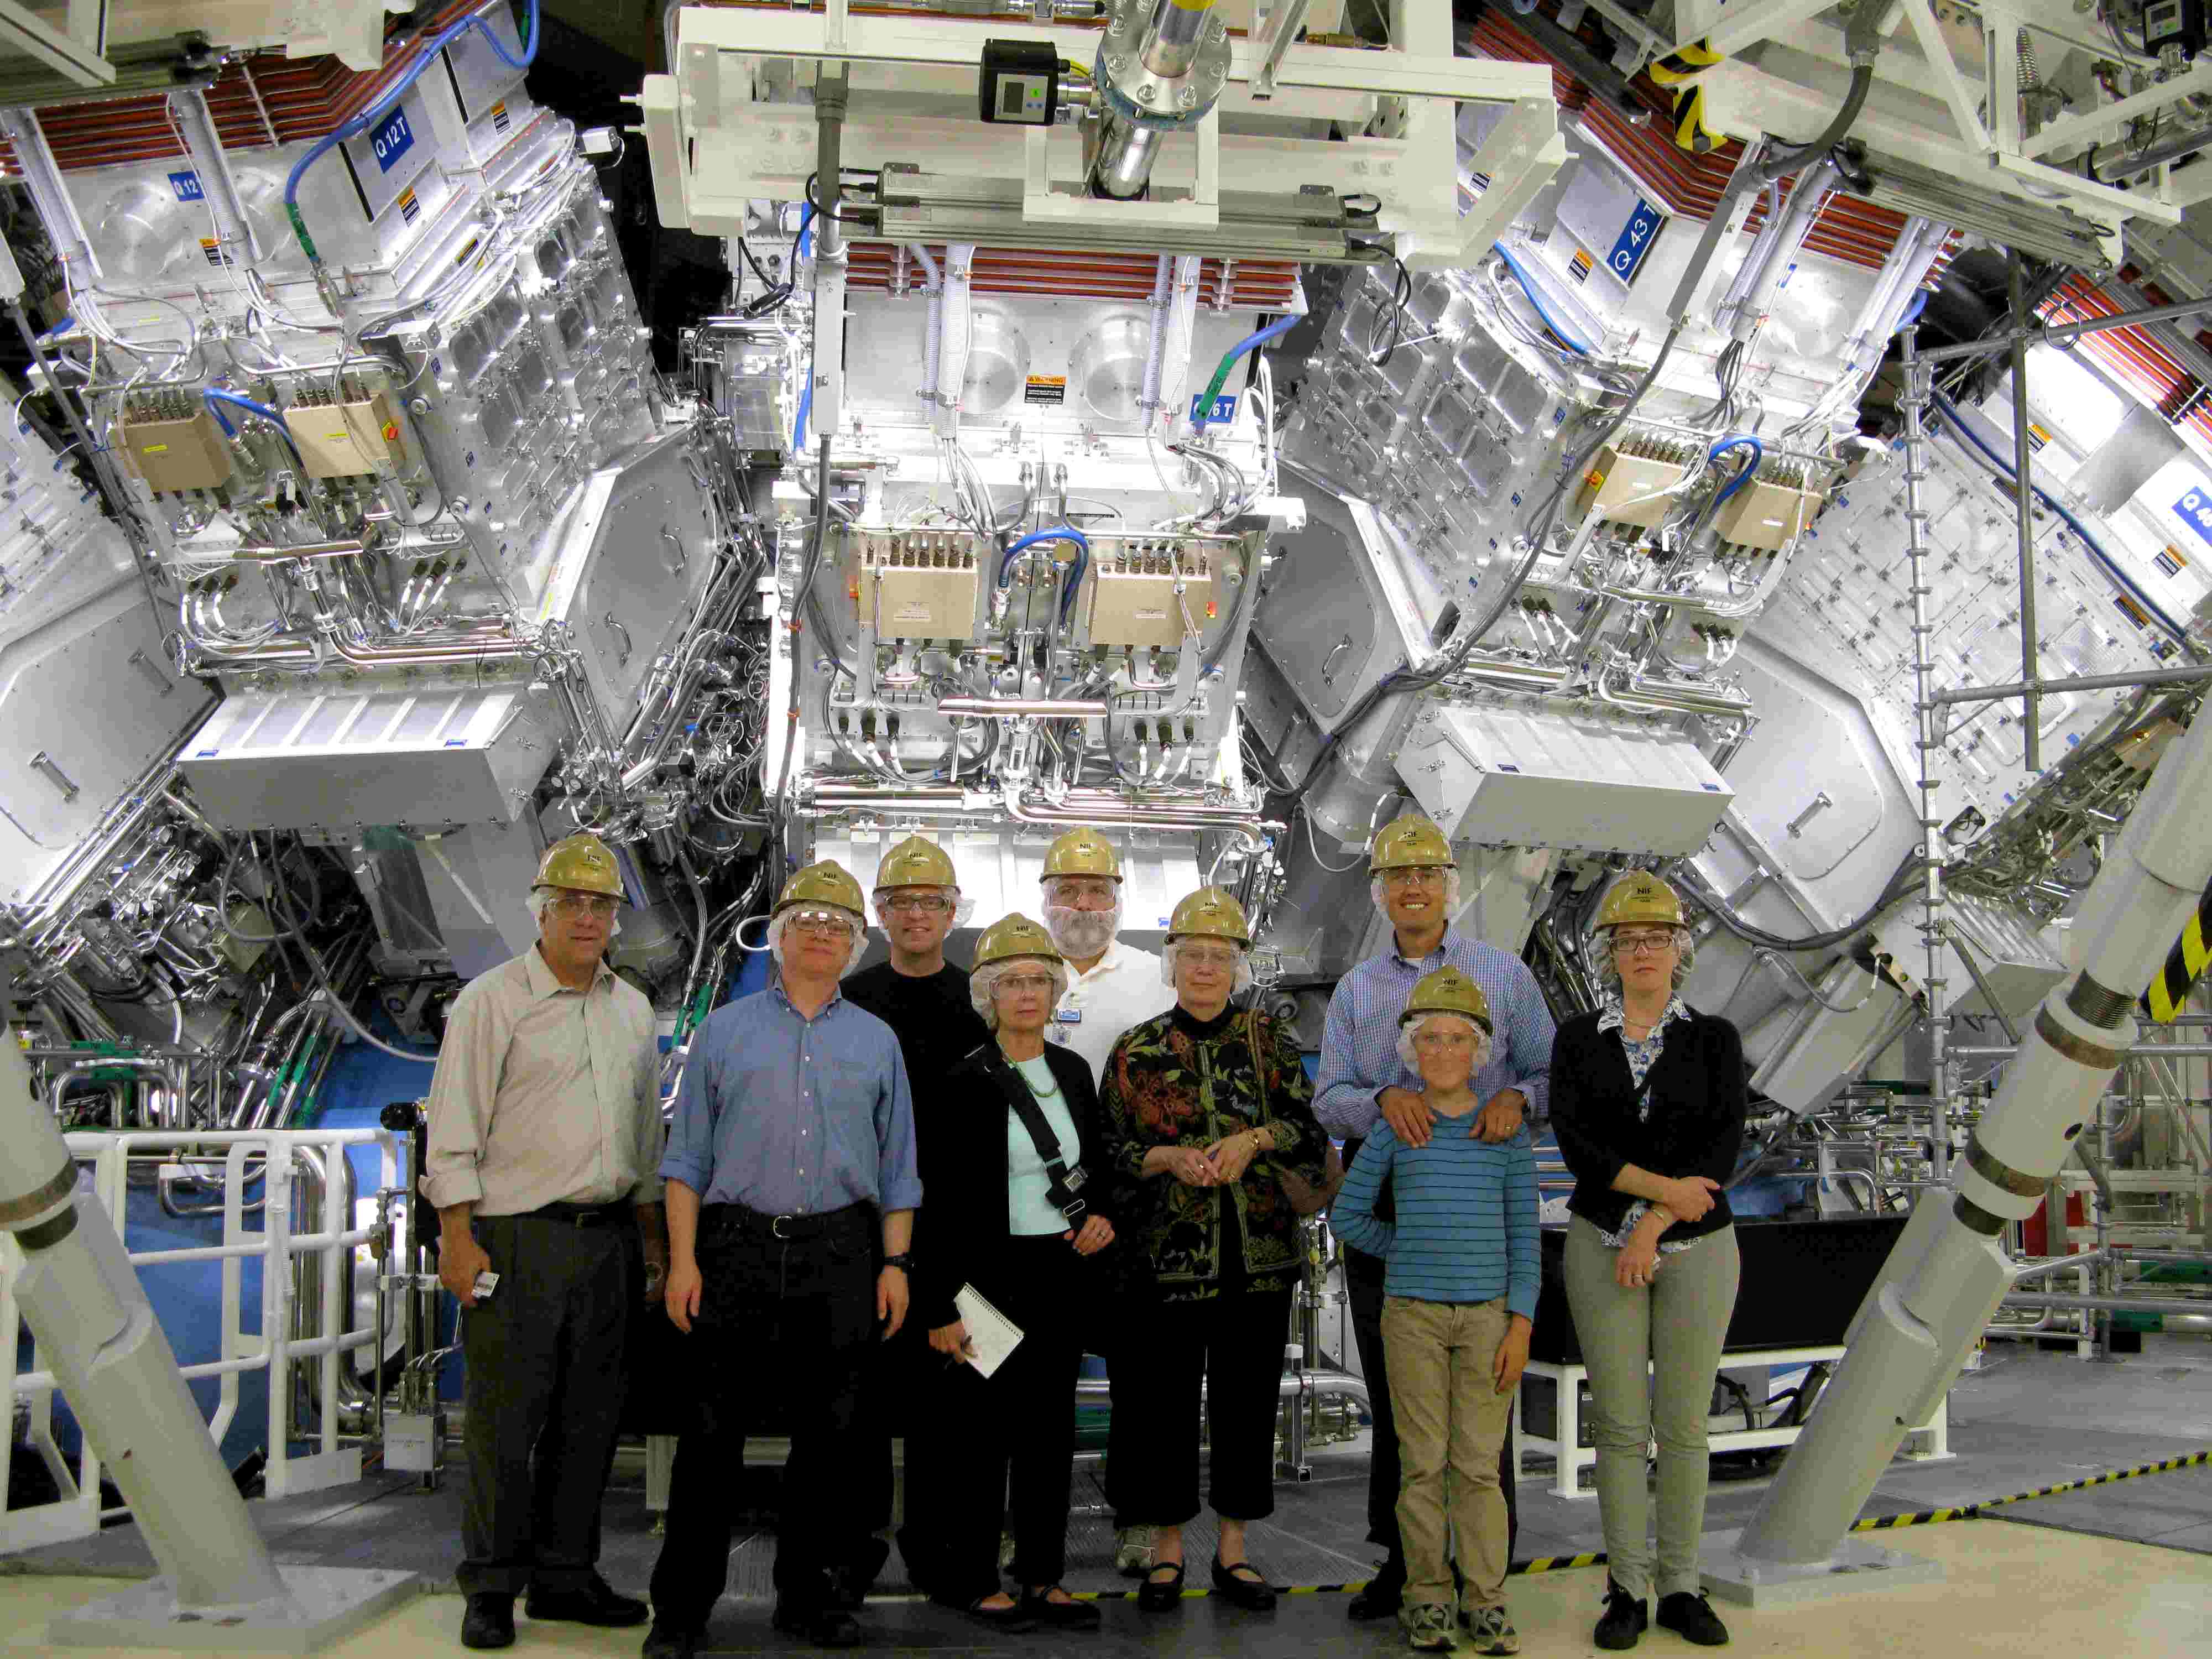 Images Wikimedia Commons/28 Steve Jurvetson Nuclear_Fusion_Reactor_(4844626925).jpg